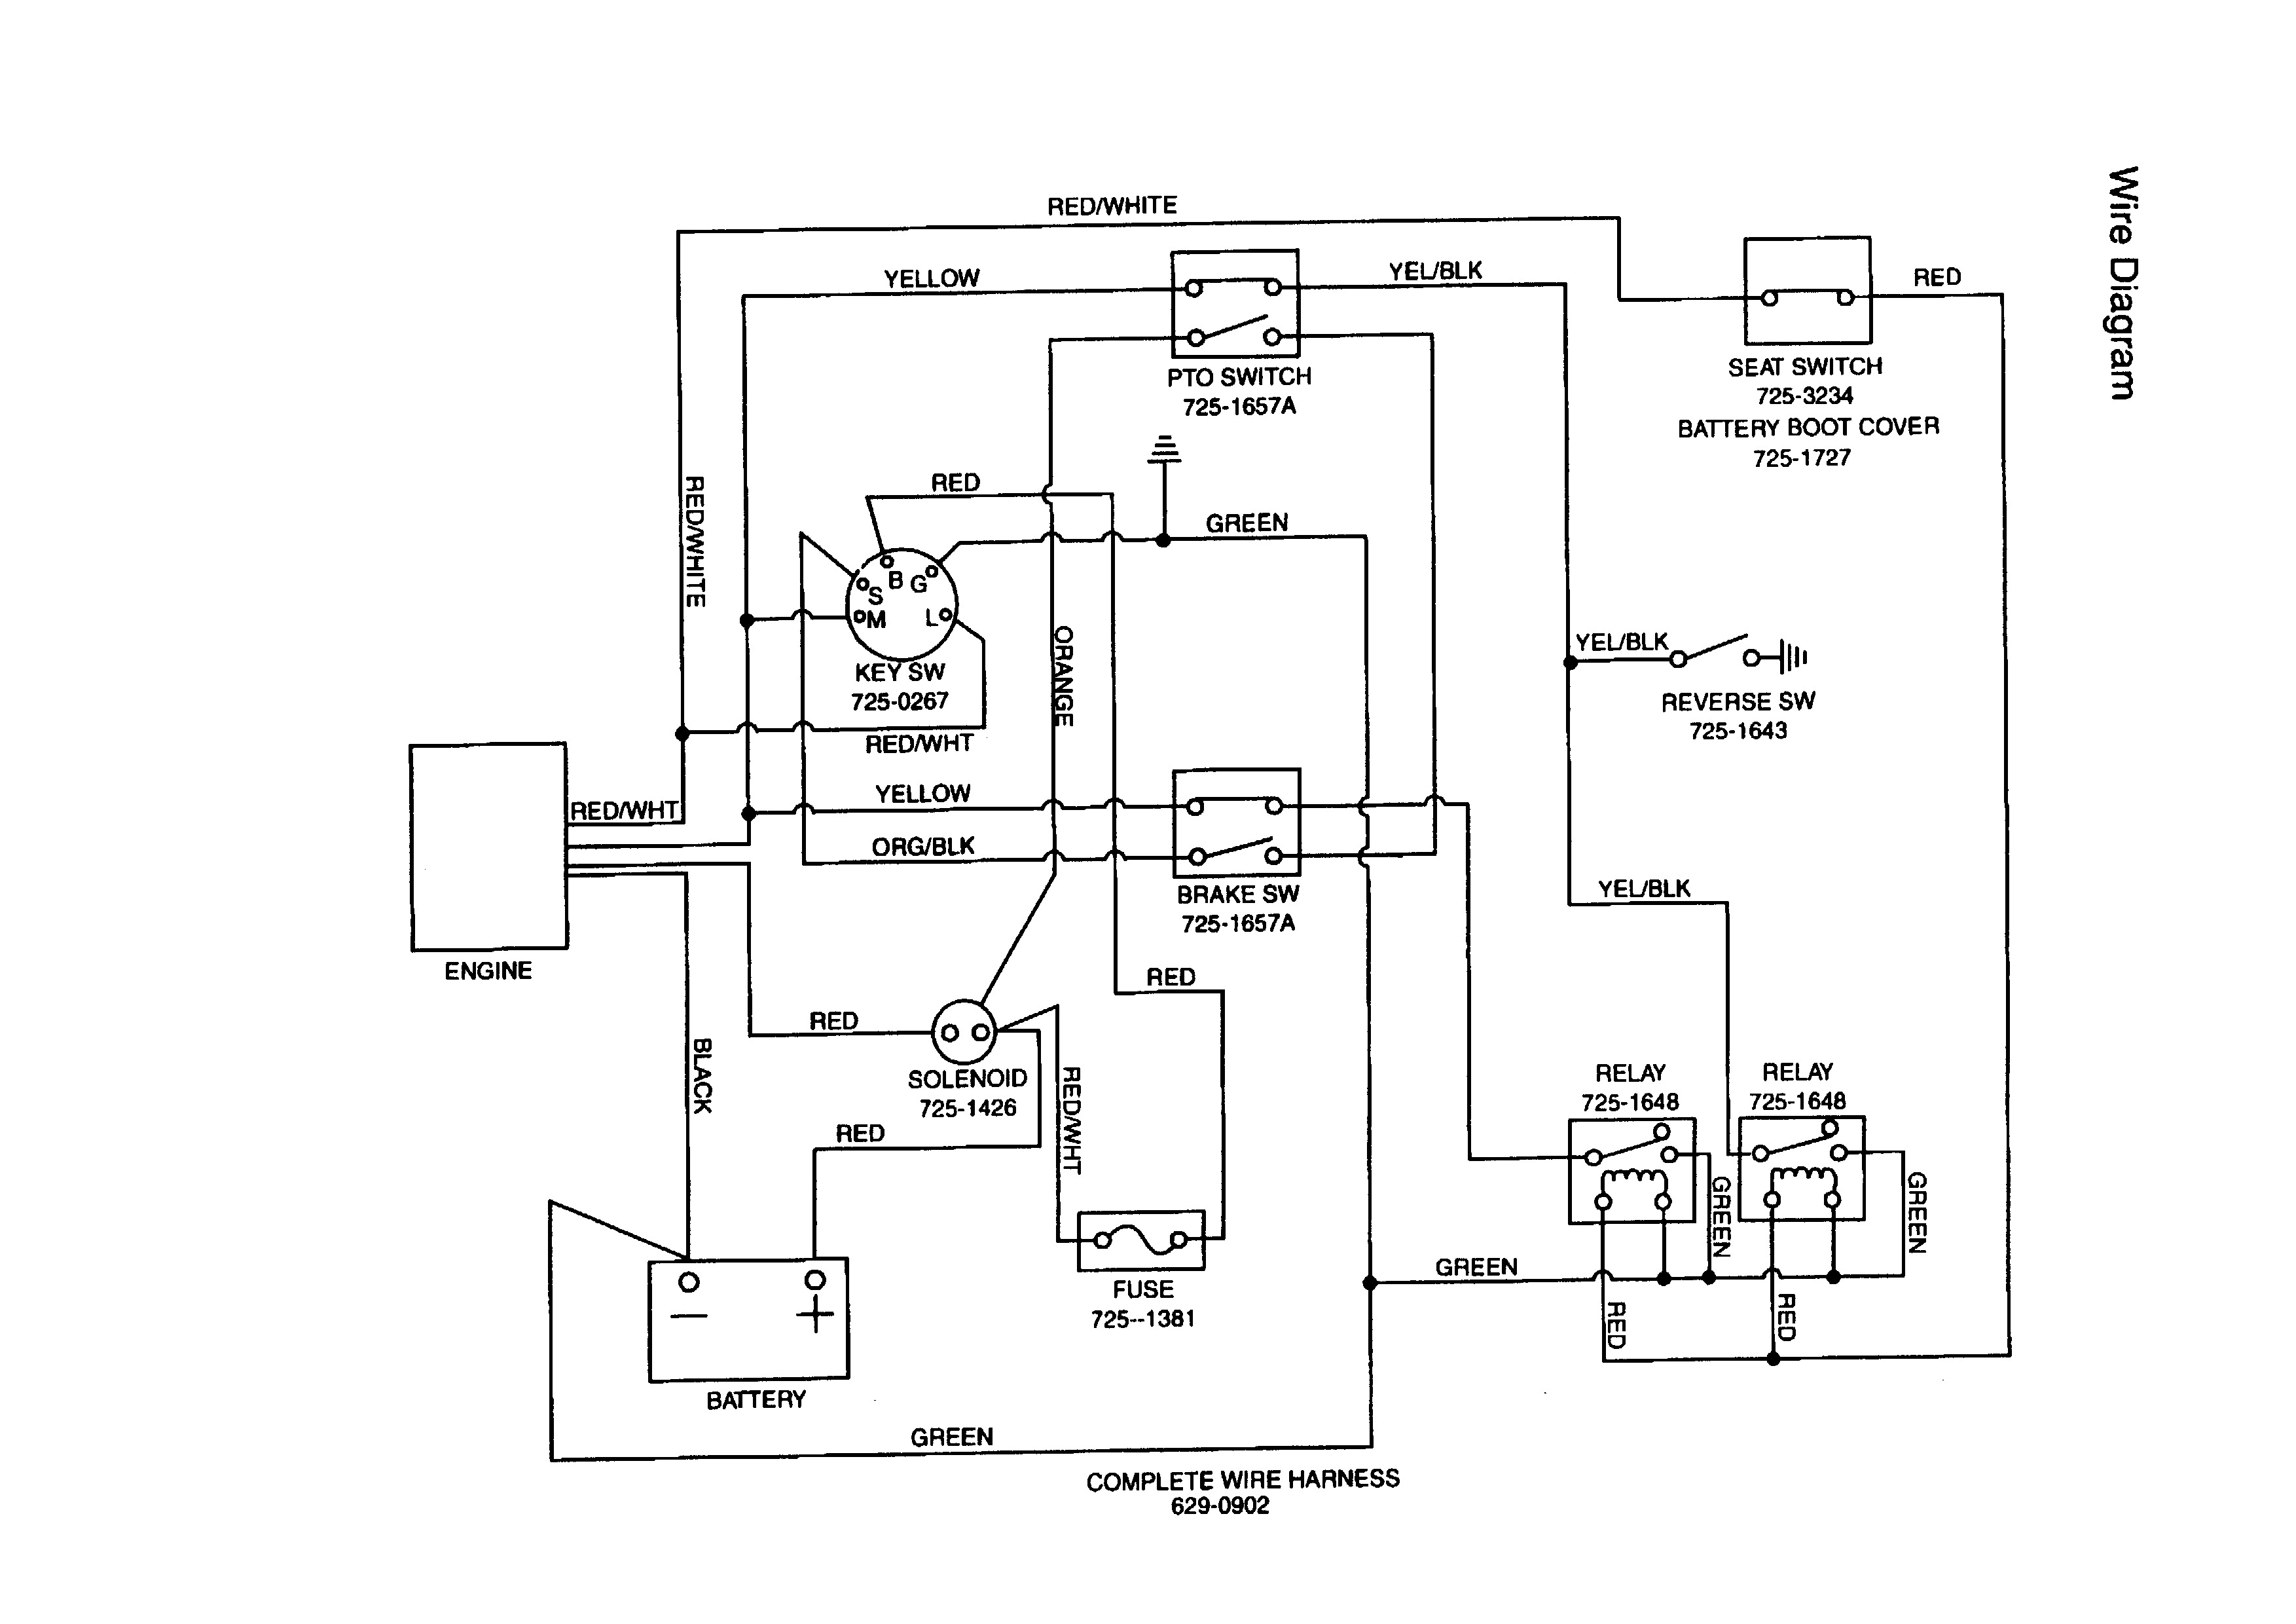 Diagram Dixon Ztr 311 Riding Mower Wiring Diagram Full Version Hd Quality Wiring Diagram Ajsewiring Robertaalteri It